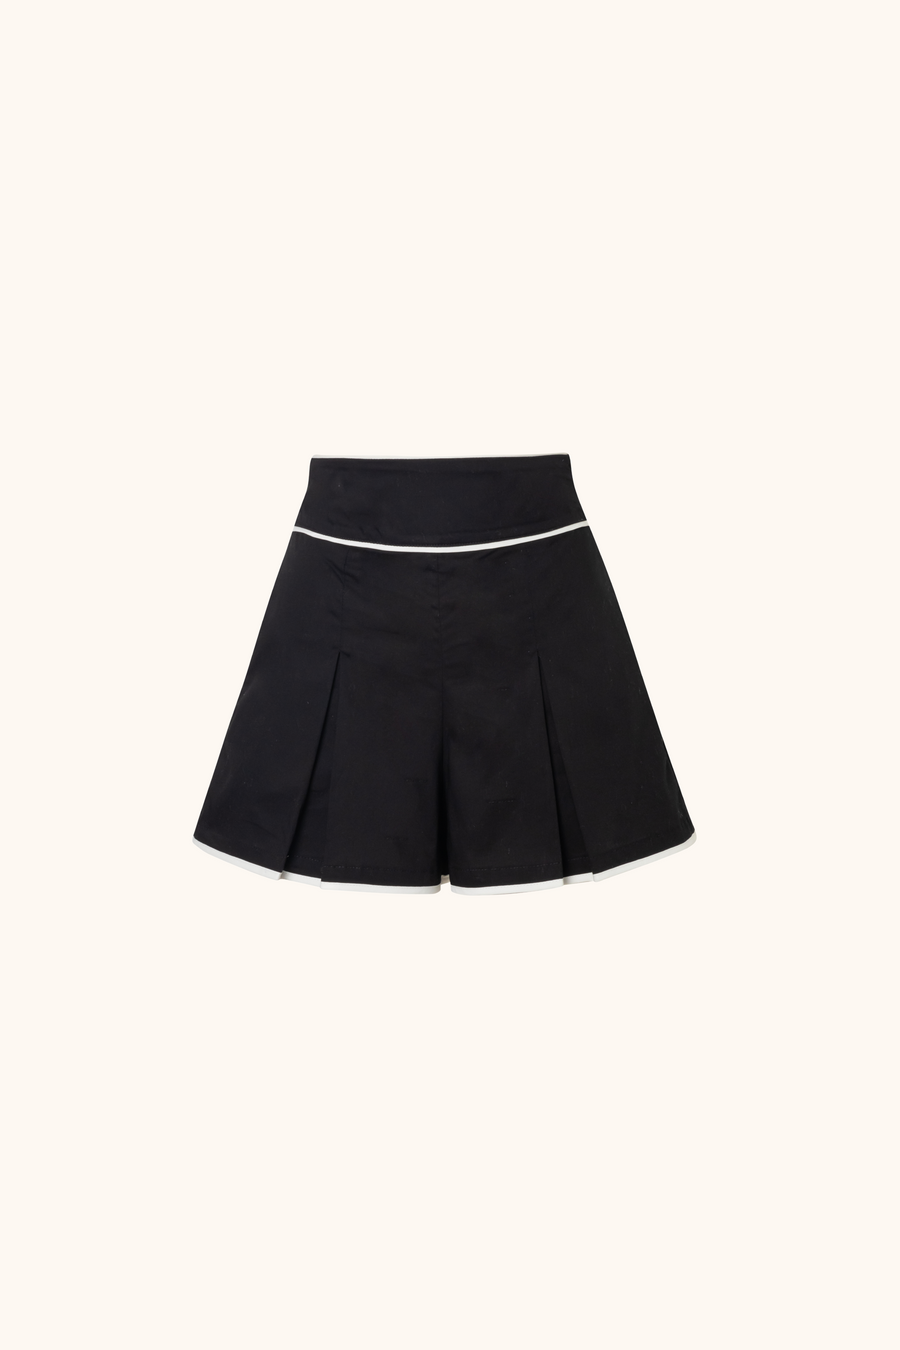 Black Bloom Shorts